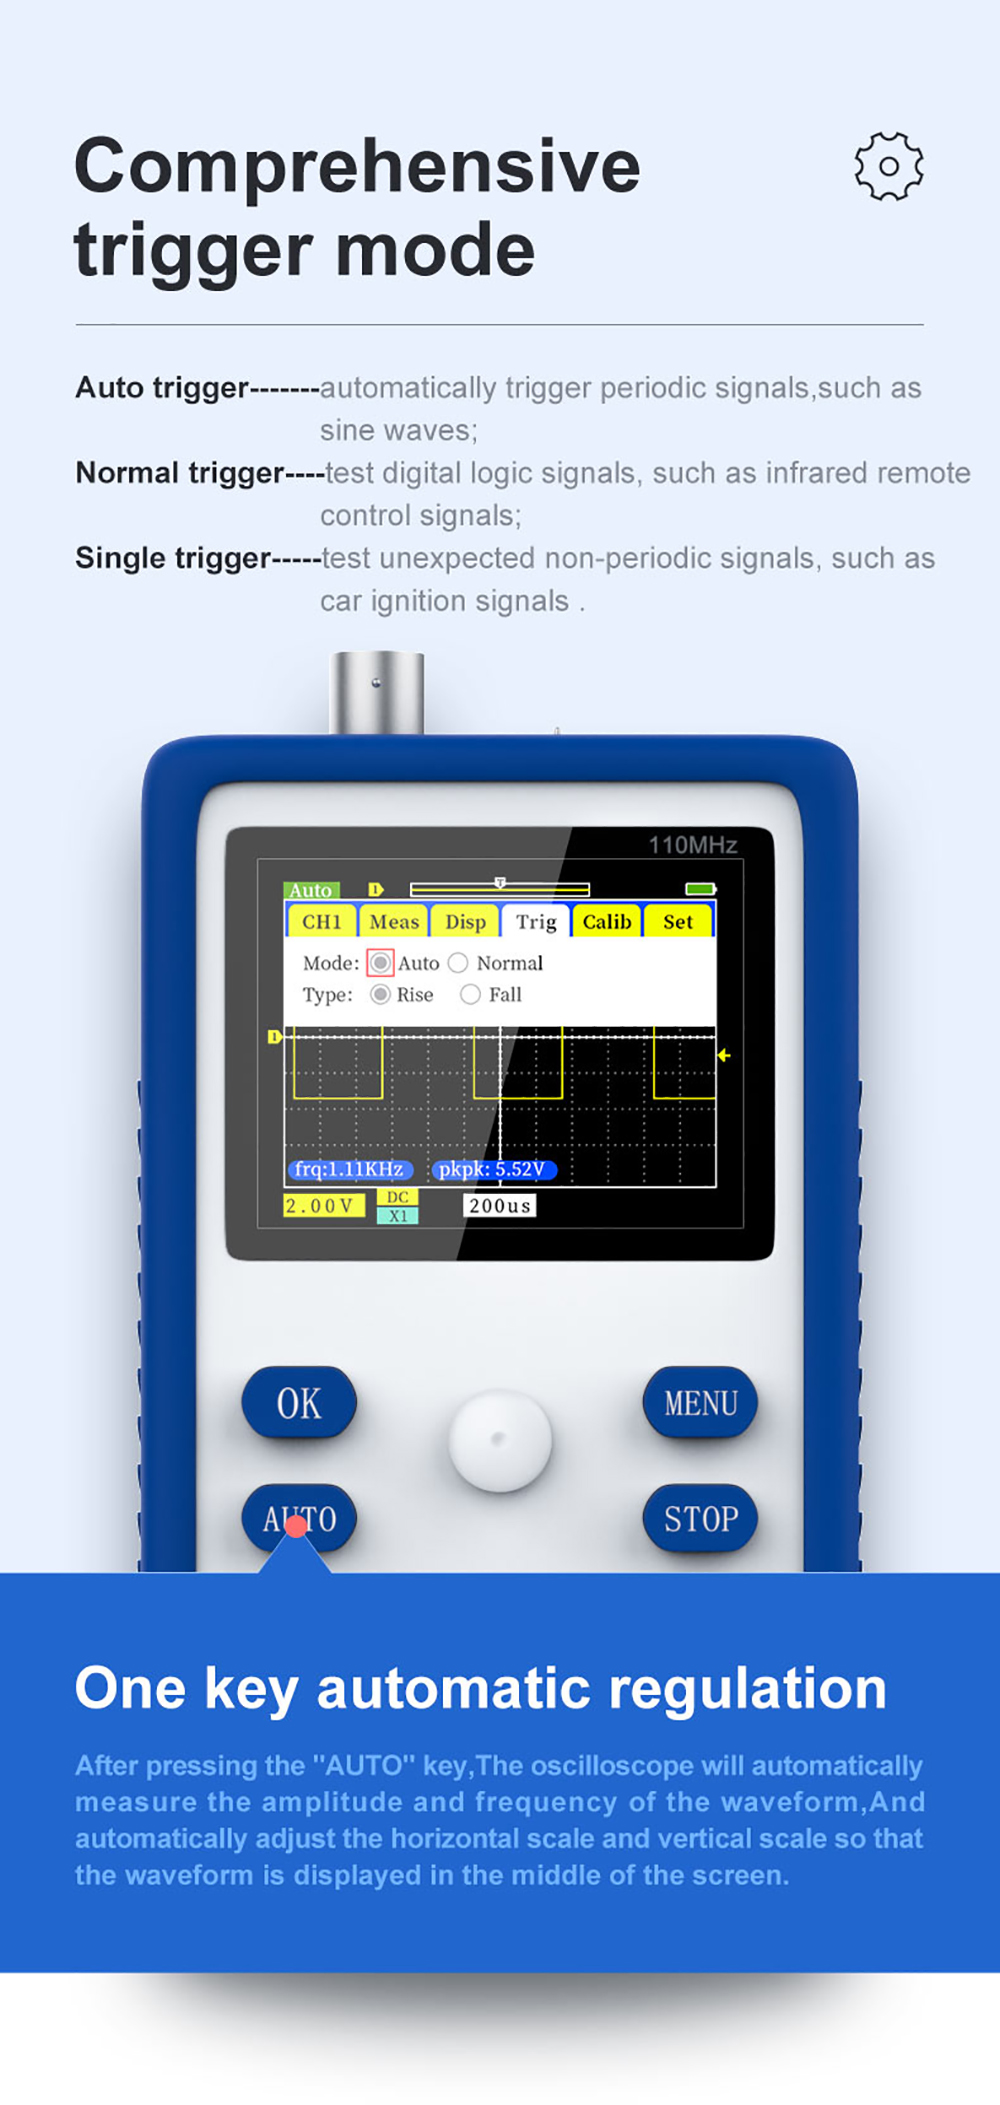 FNIRSI-1C15-Professional-Digital-Oscilloscope-500MSs-Sampling-Rate-110MHz-Analog-Bandwidth-Support-W-1757564-8